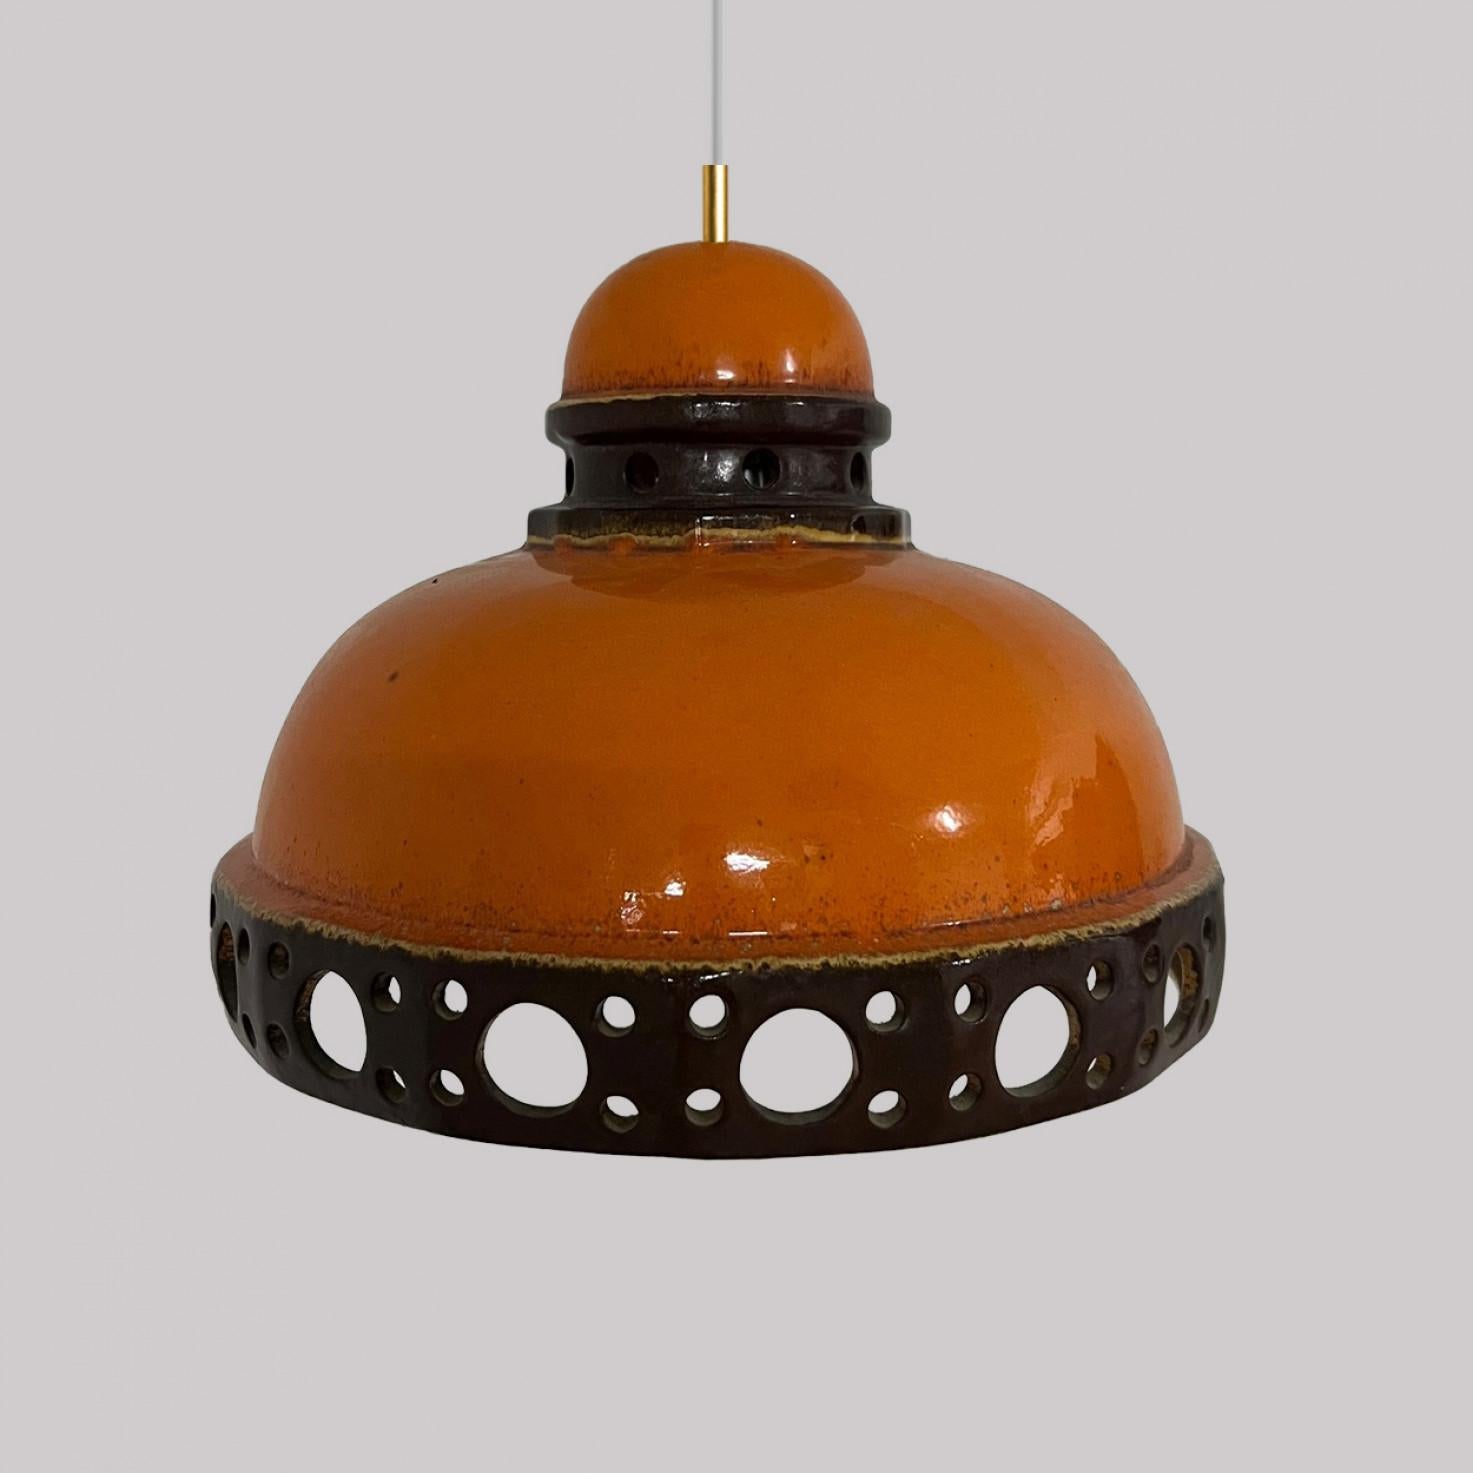 Set of Mixed Orange Glazed Ceramic Pendant Lights, Germany, 1970s For Sale 4